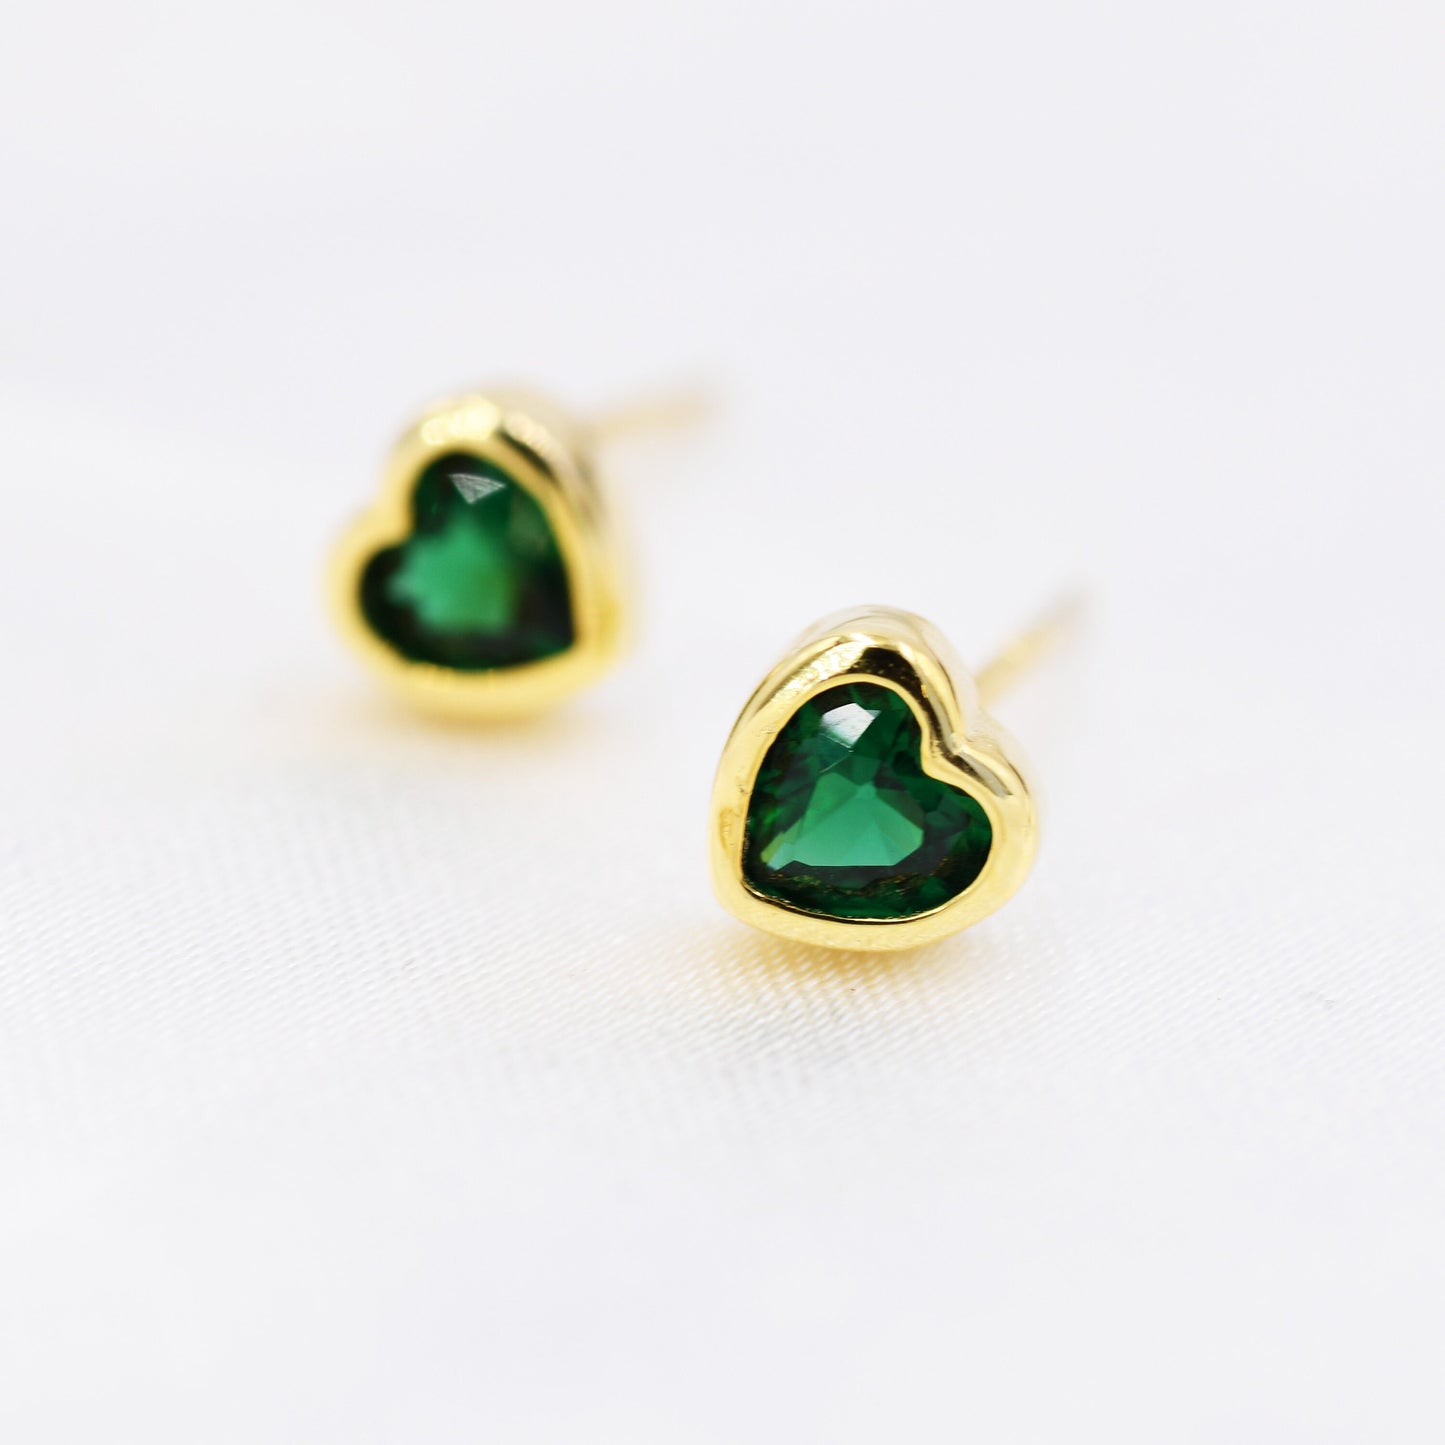 Tiny Emerald Green CZ Heart Stud Earrings in Sterling Silver, Silver or Gold, Green Crystal Heart Earrings, Stacking Earrings